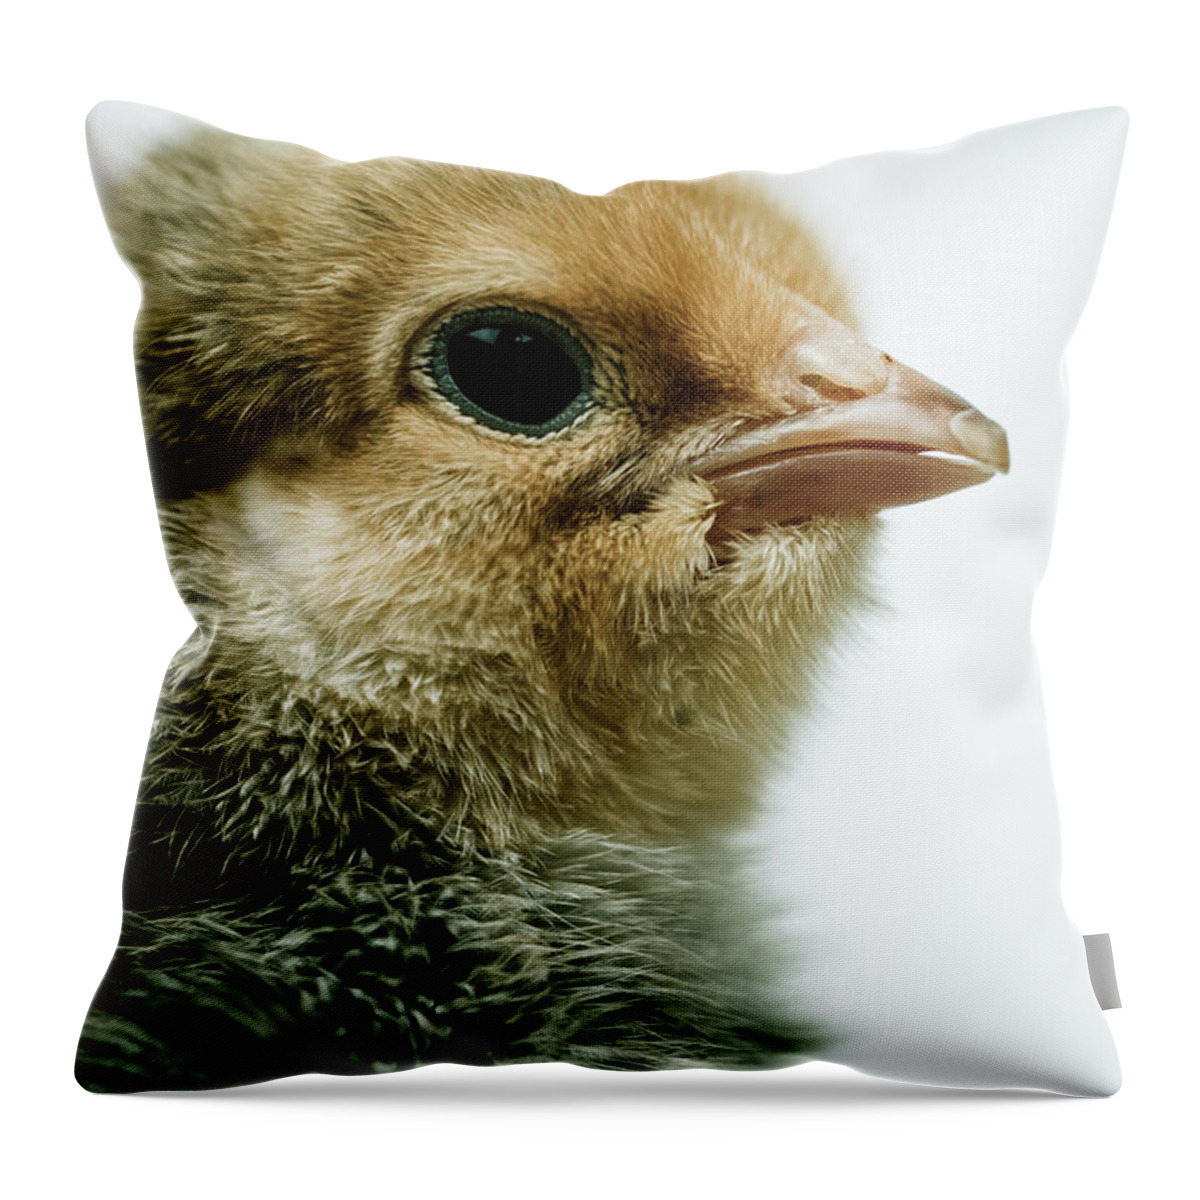 Buff Brahma Throw Pillow featuring the photograph Cute Baby Chick - Buff Brahma by Ada Weyland